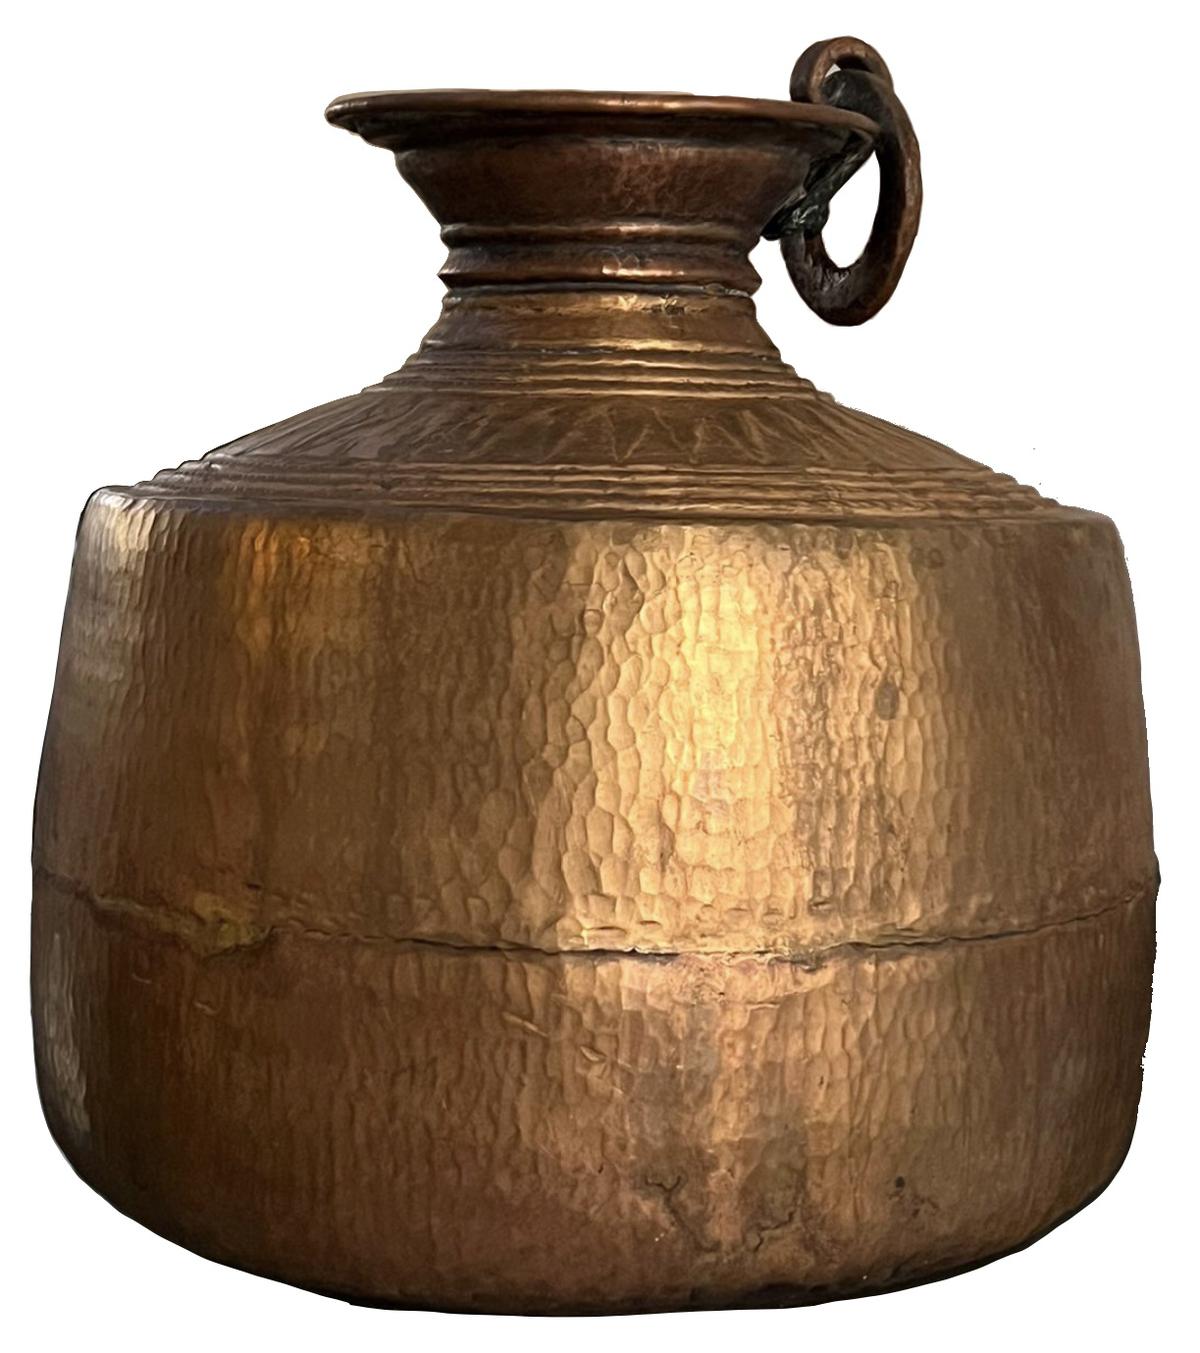 Beaten copper pot